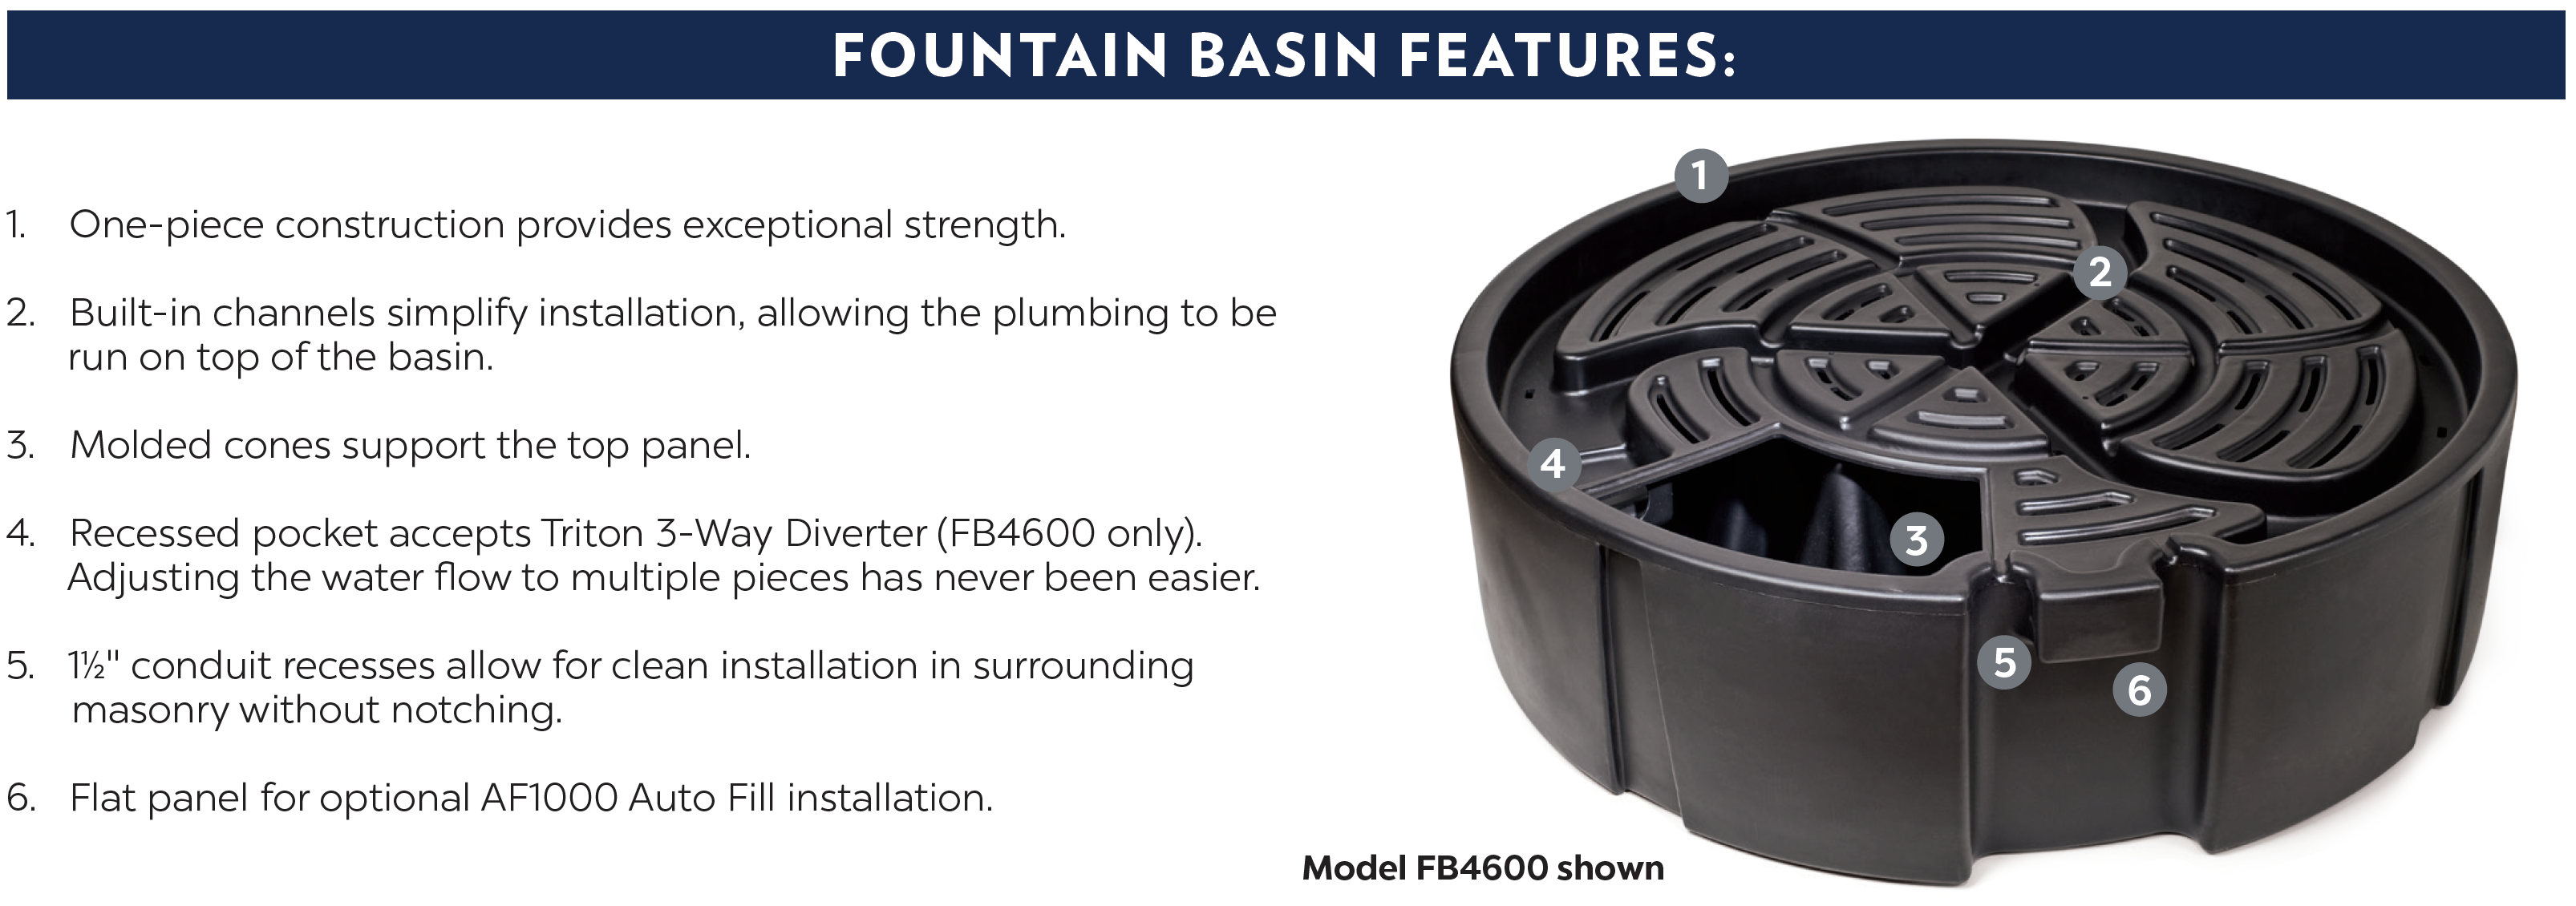 Fountain Basin Features